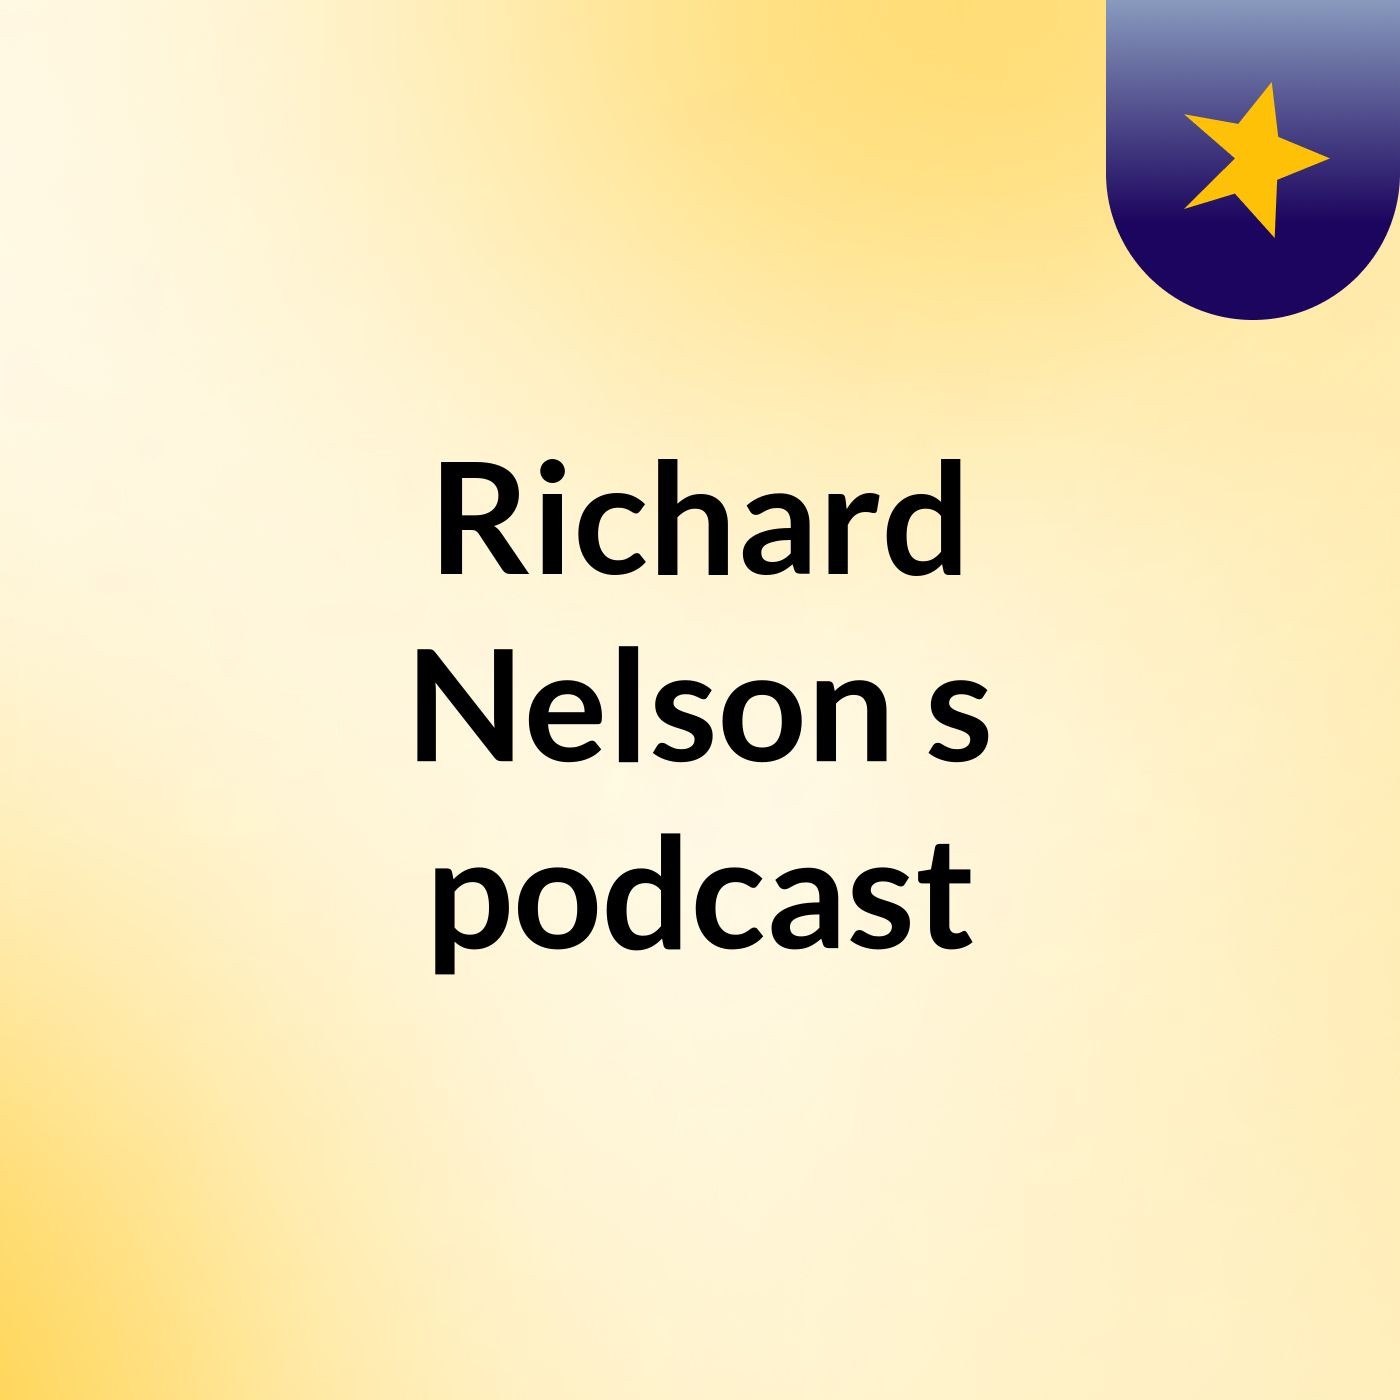 Richard Nelson's podcast